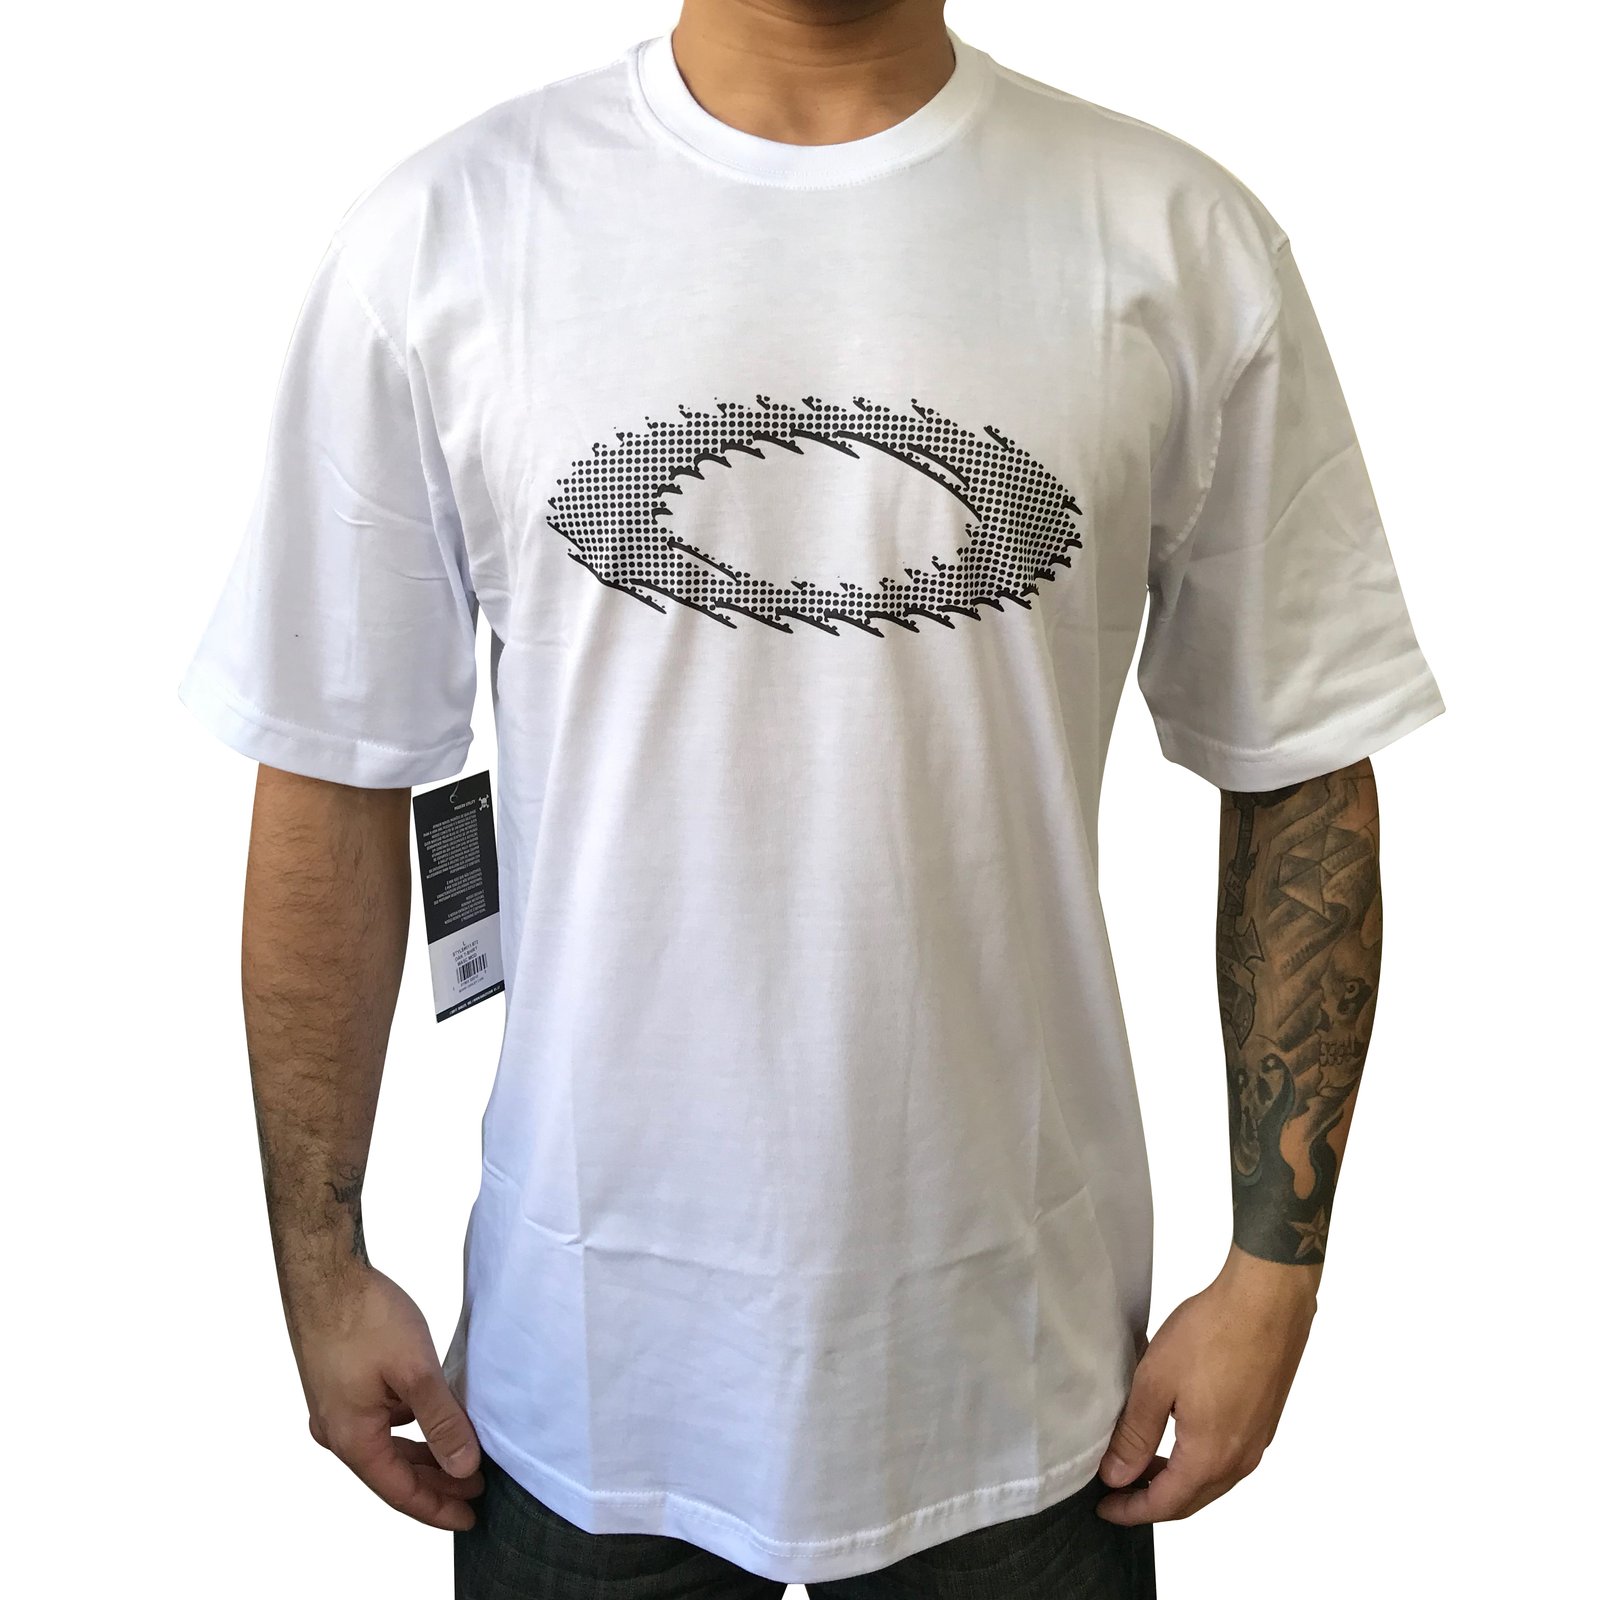 Camiseta Oakley logo cinza ⋆ Sanfer Acessórios